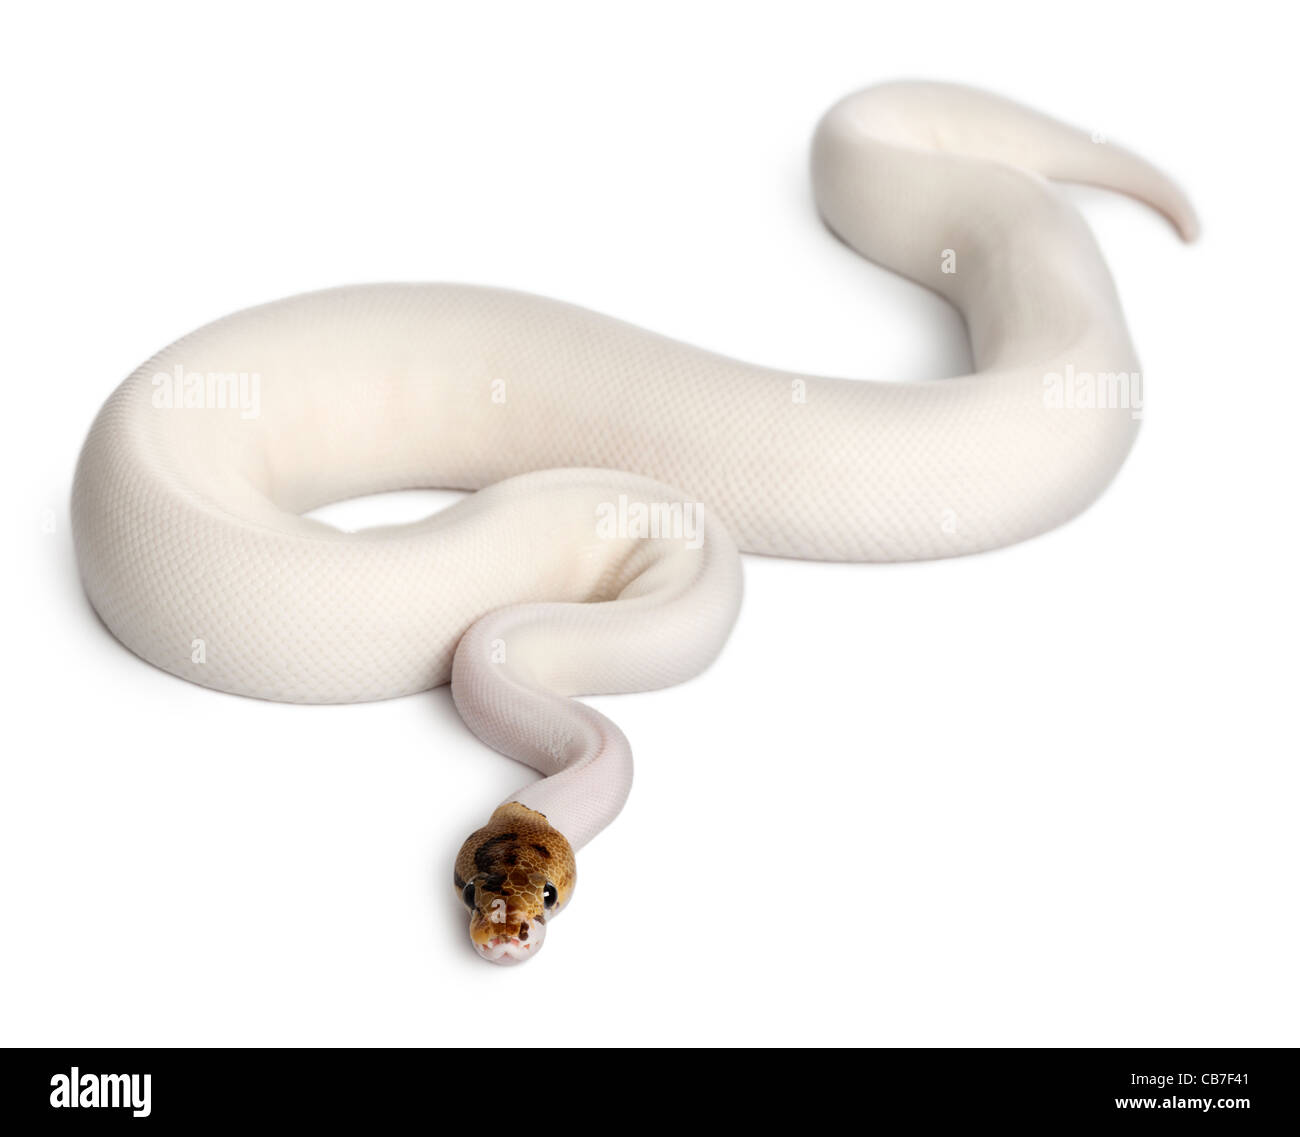 Pied femmina spider Royal Python Python regius, 18 mesi di età, di fronte a uno sfondo bianco Foto Stock